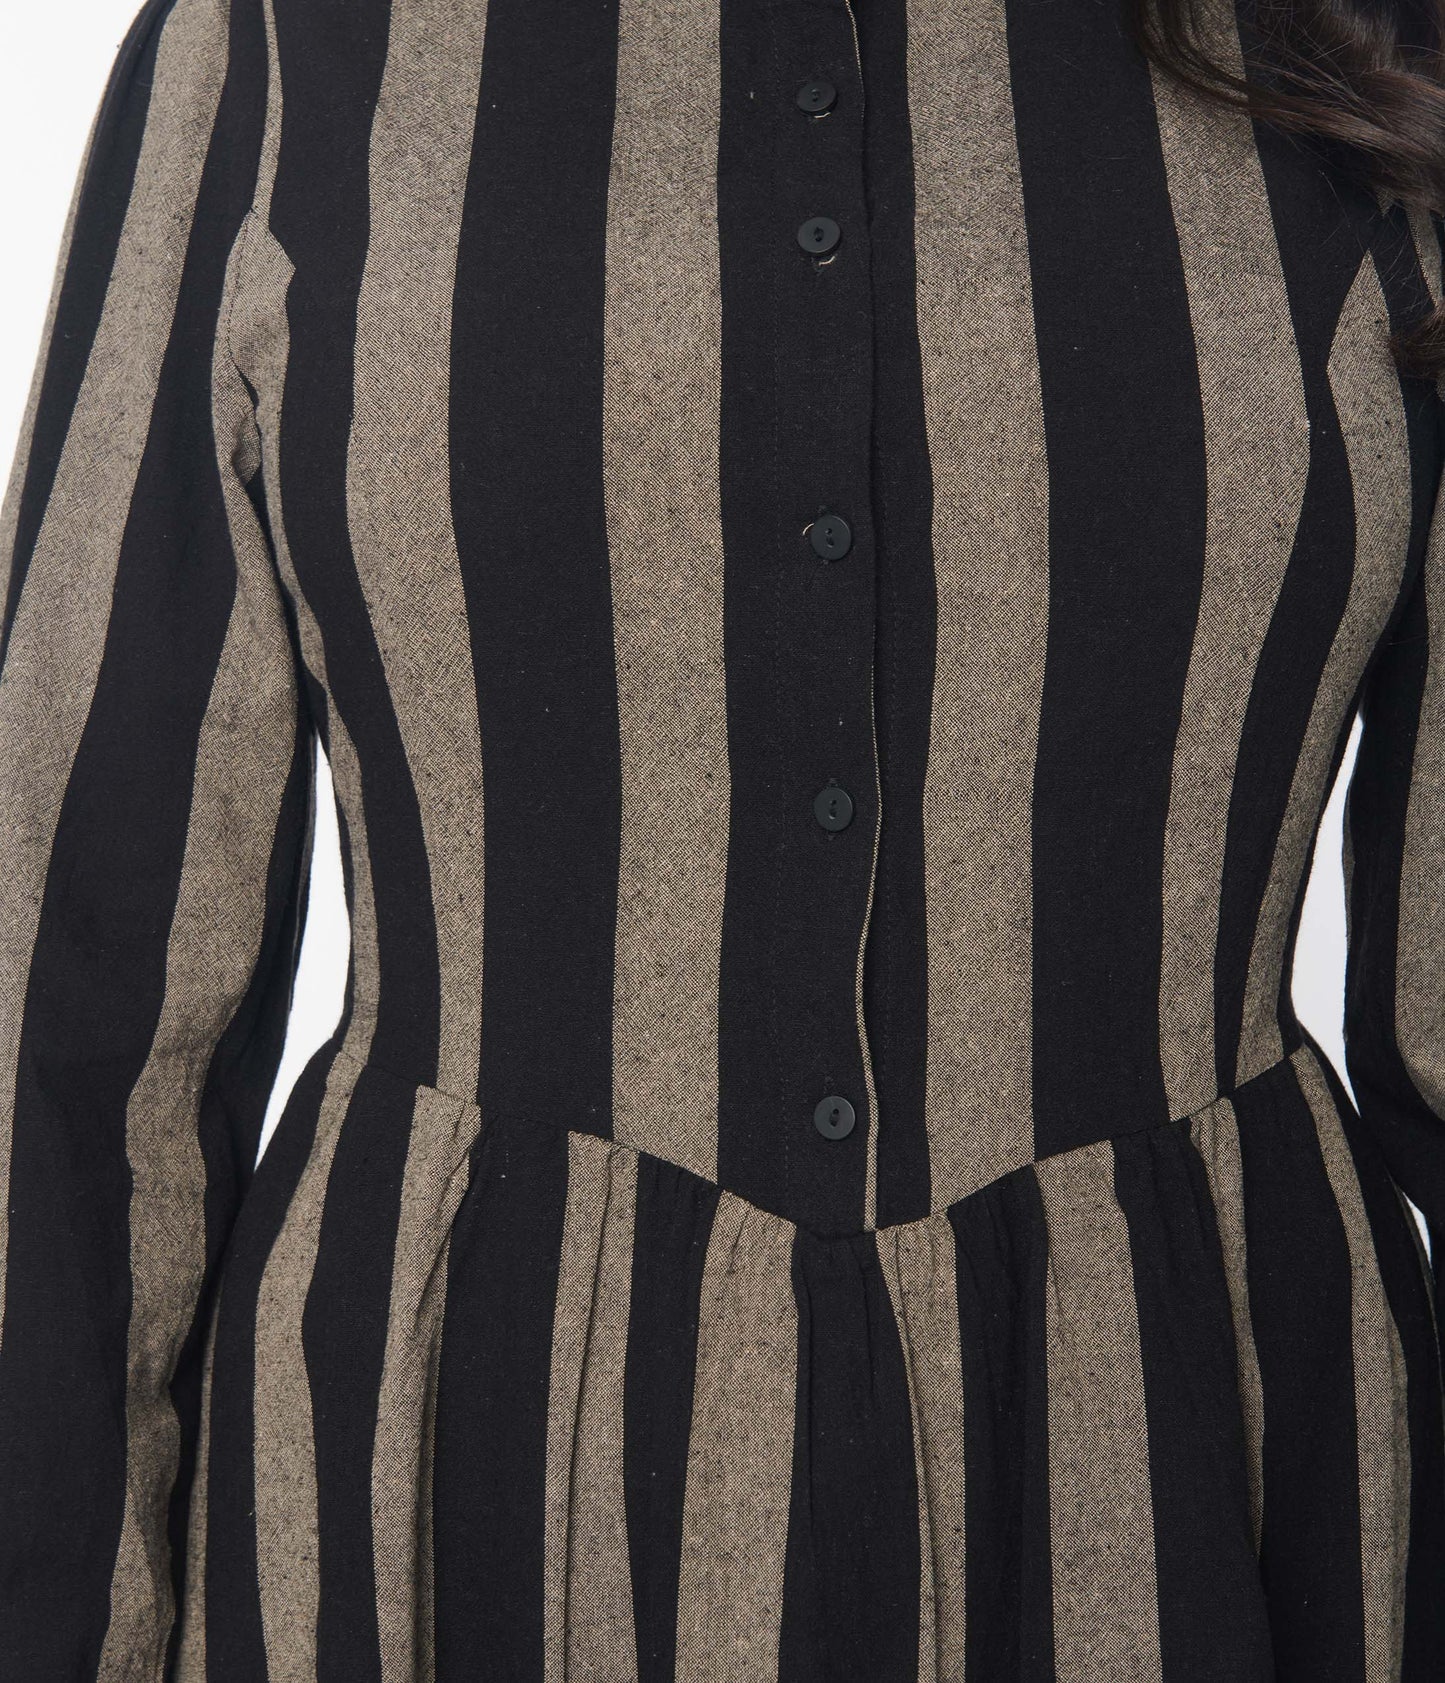 Black & Grey Striped Midi Dress